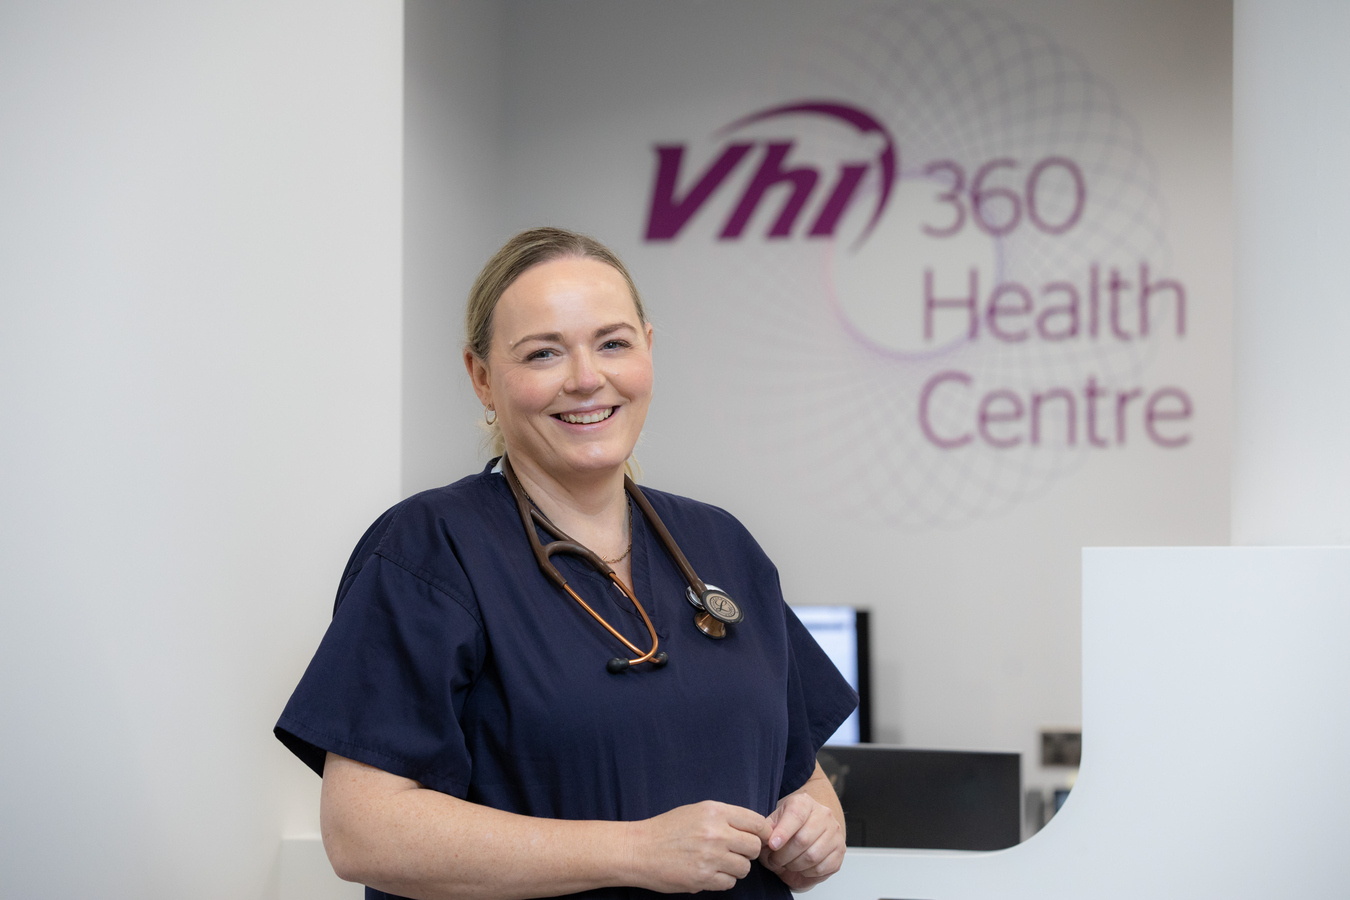 Limerick Vhi 360 Health Centre